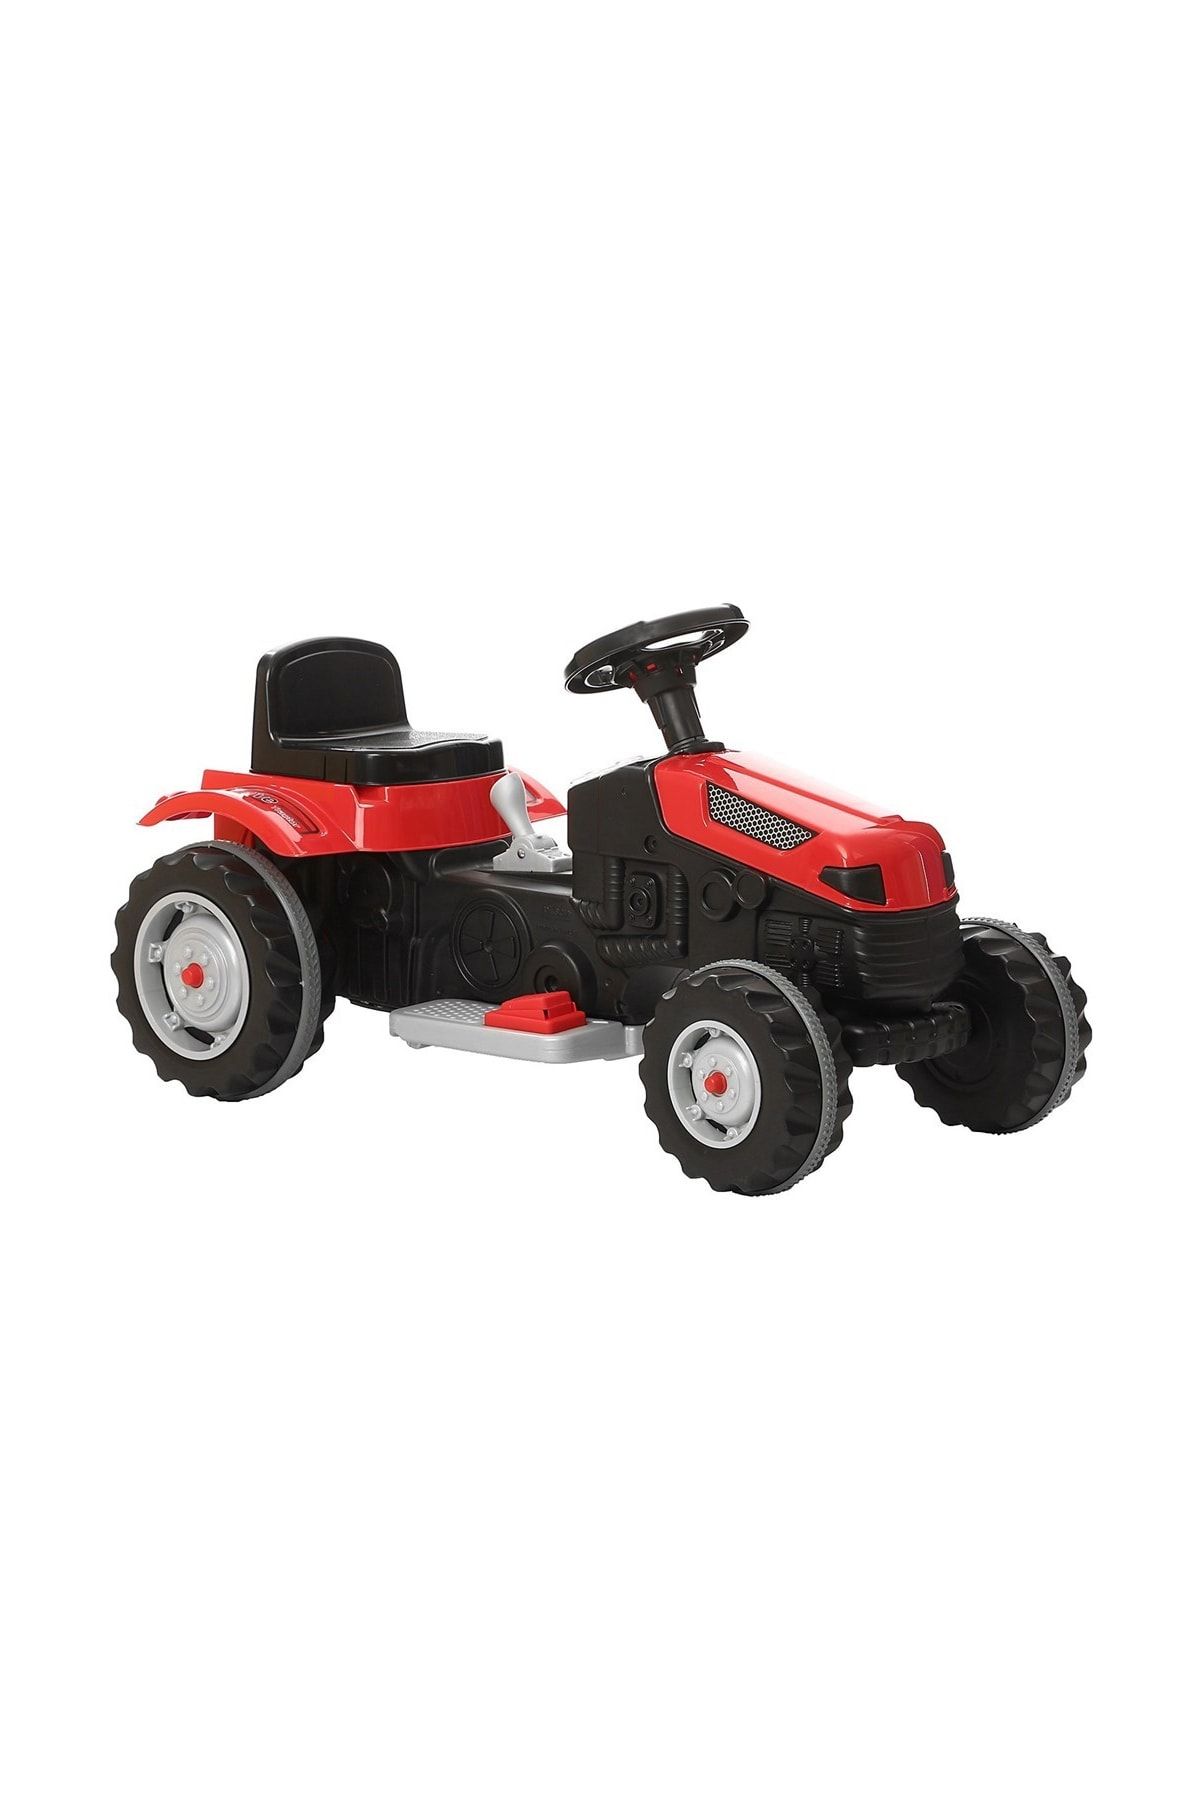 PİLSAN Active Tractor 6v Akülü Traktör / Kırmızı